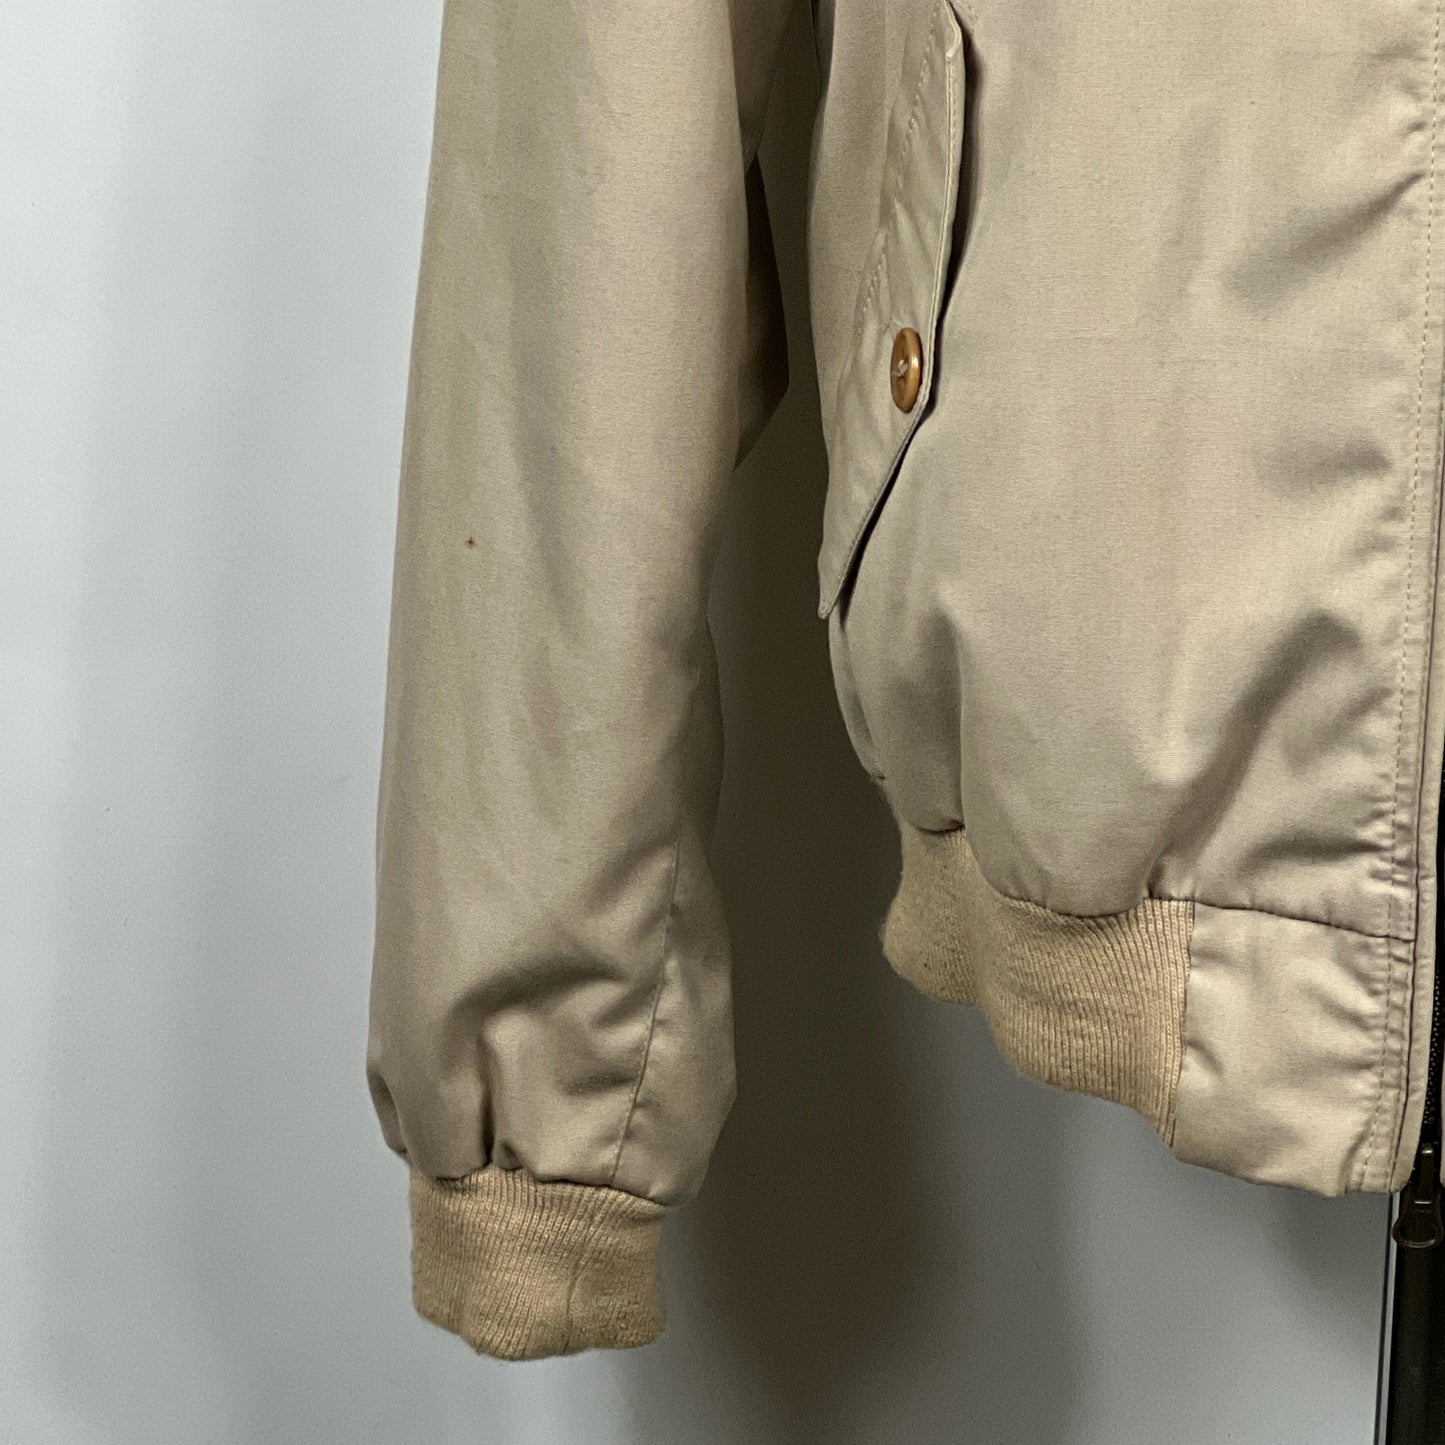 Giacca Barbour Beige corta cotone Medium - Beige Cotton Jacket Size Medium